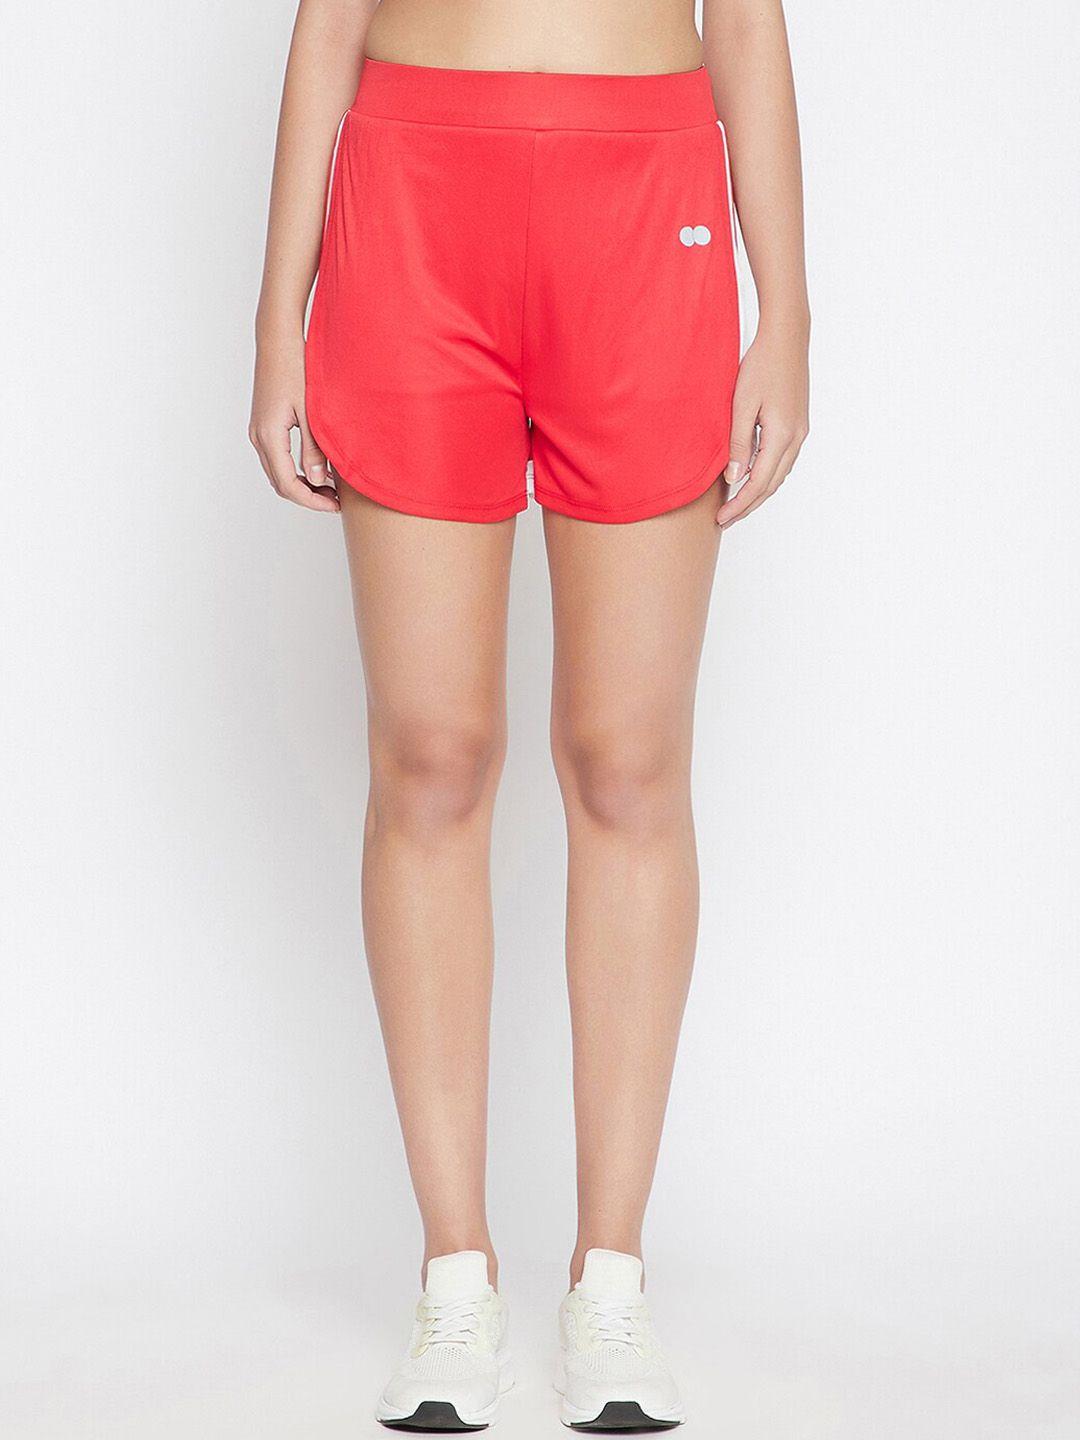 clovia women red slim fit sports shorts